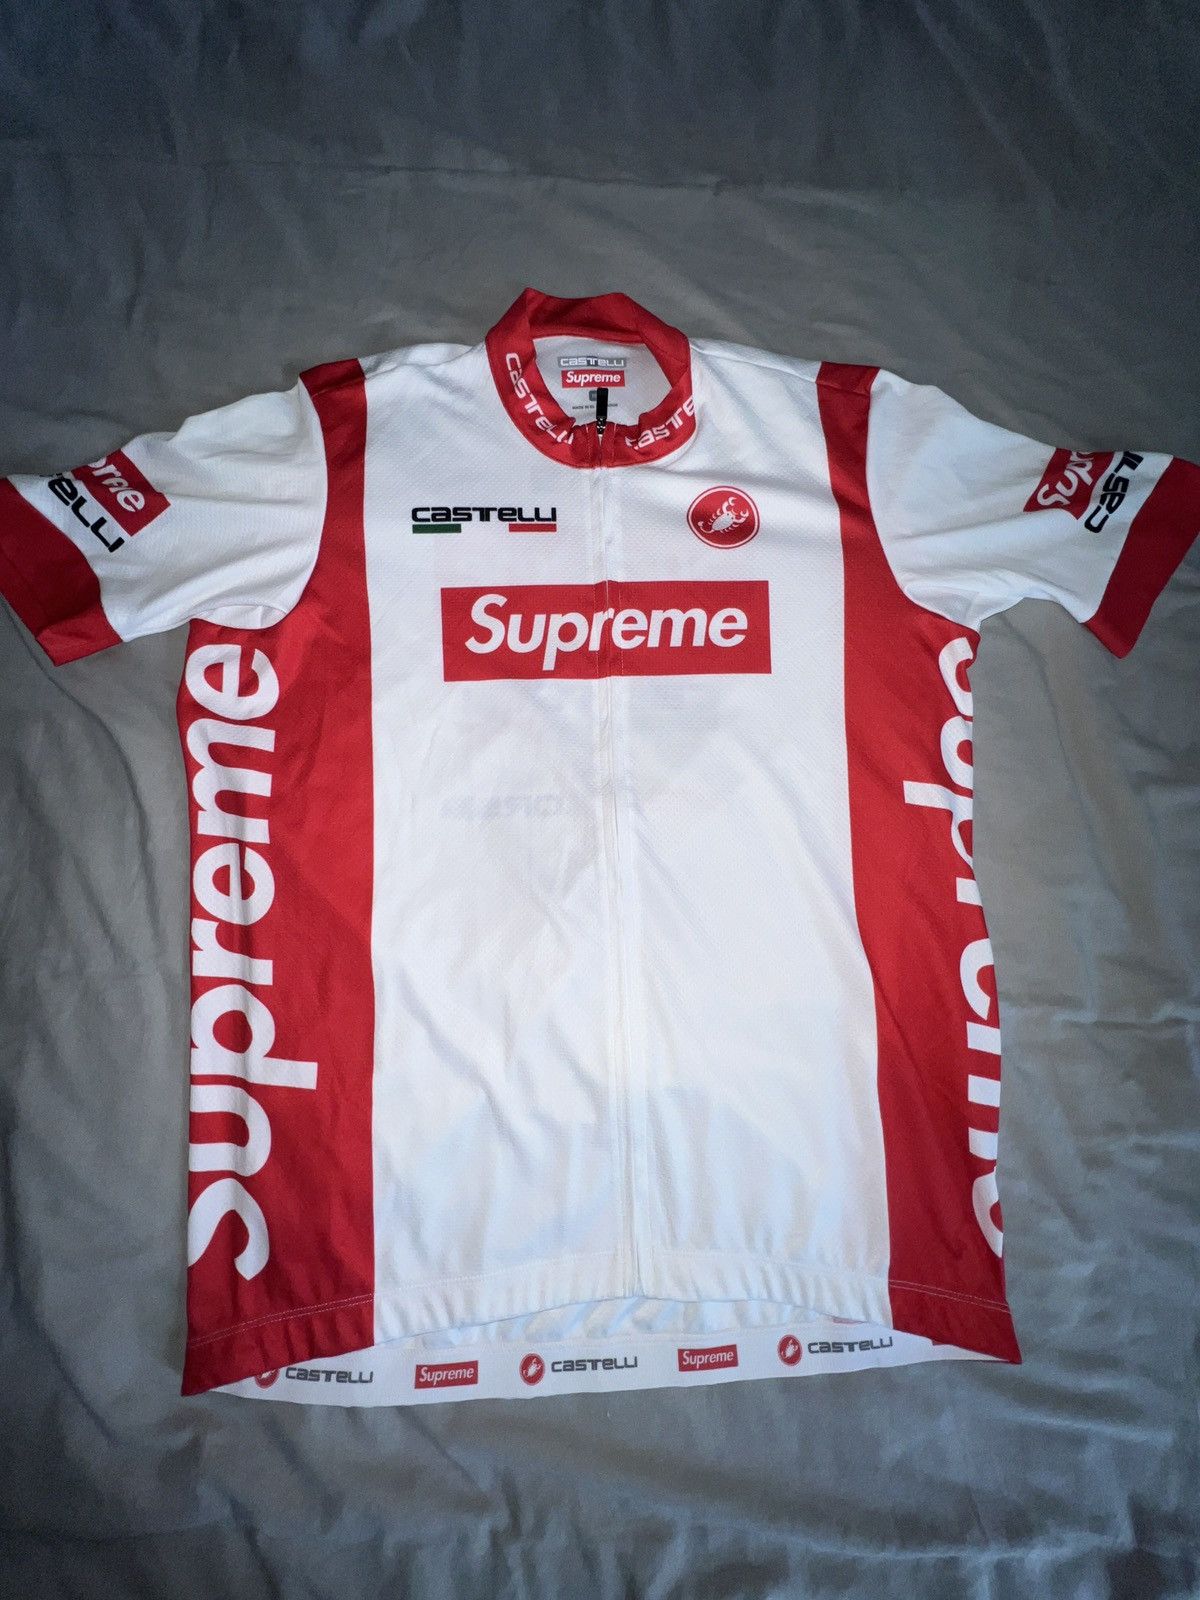 Supreme Supreme x Castelli Cycling Jersey | Grailed